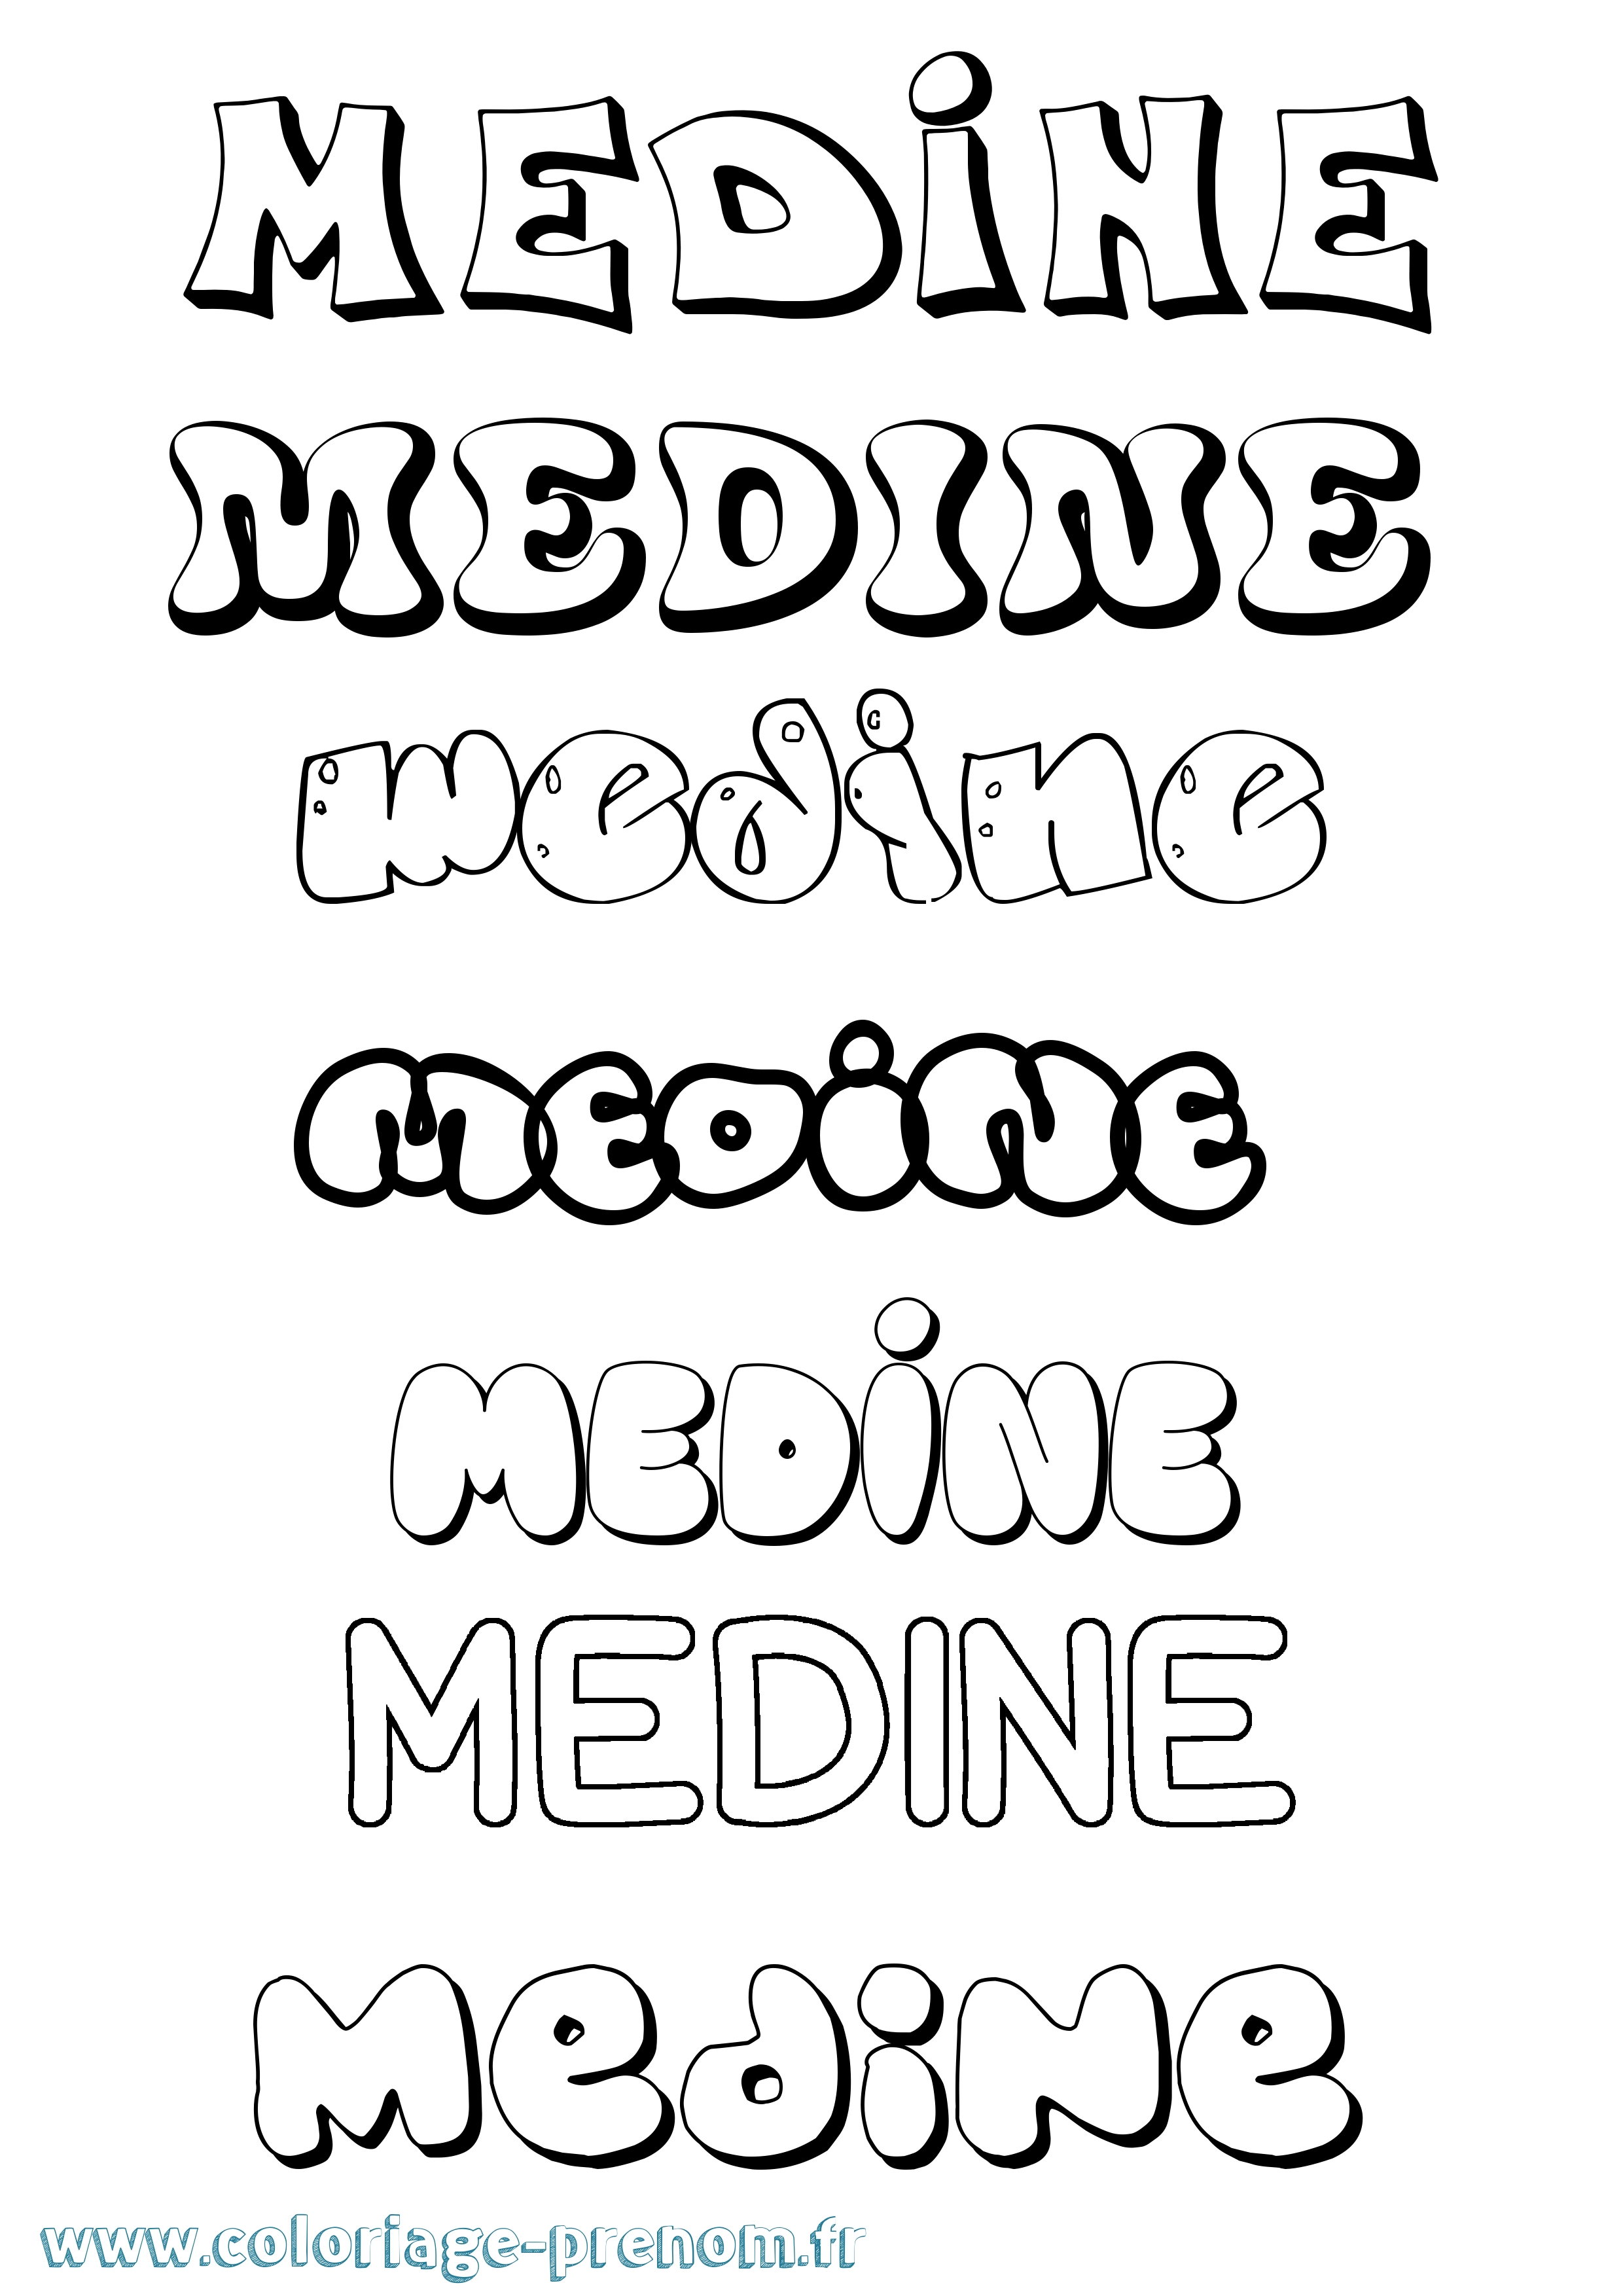 Coloriage prénom Medine Bubble